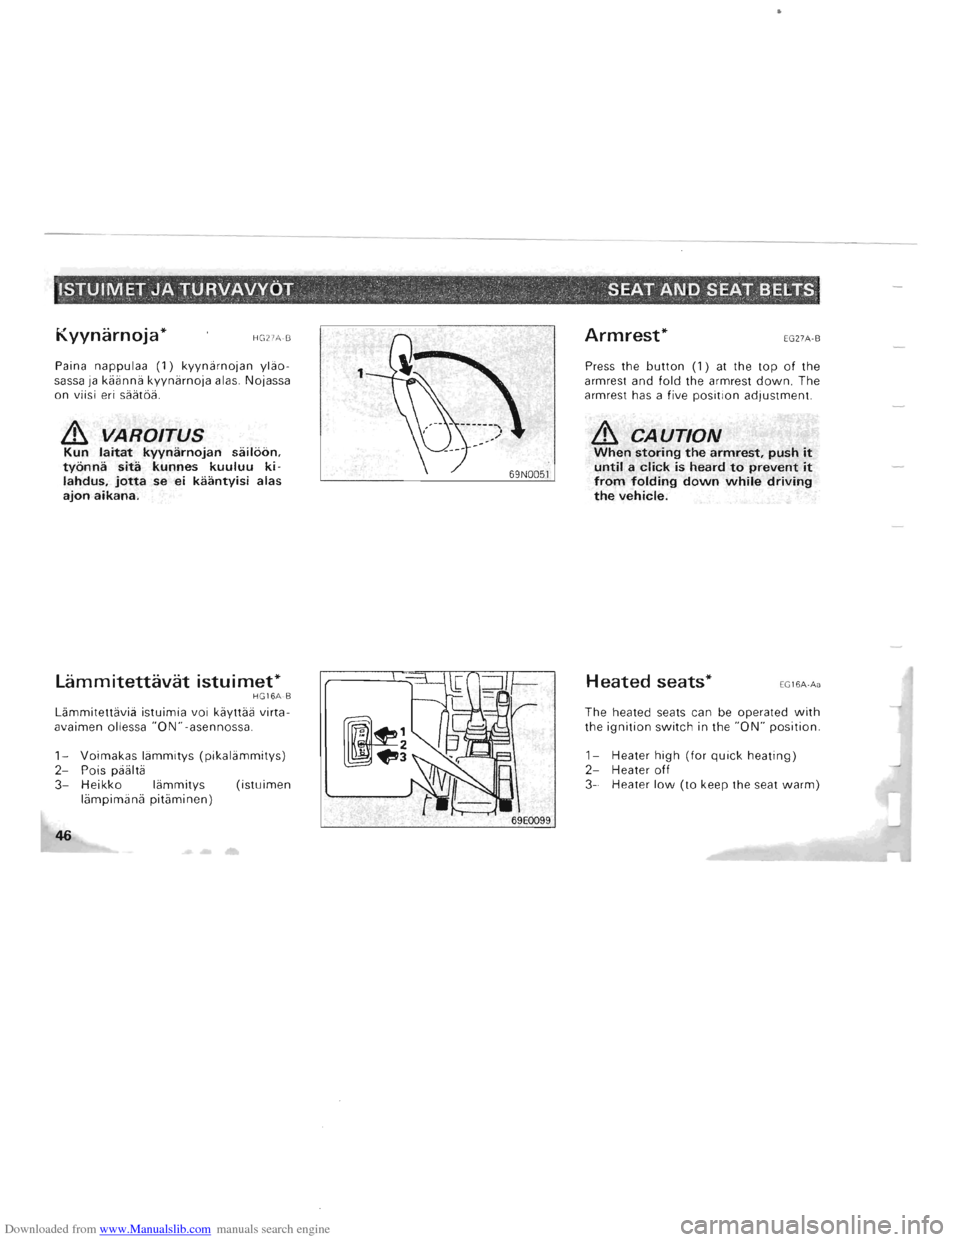 MITSUBISHI PAJERO 1996 2.G User Guide Downloaded from www.Manualslib.com manuals search engine .ISTUIM~T JA TURVAVVOT   . . .  . ", ..... :  . SEAT AND SEAT  BELTS 
Kyynarnoja* HG27A ·B 
Paina  nappulaa (1) kyyniirnojan yliio­
sassa 